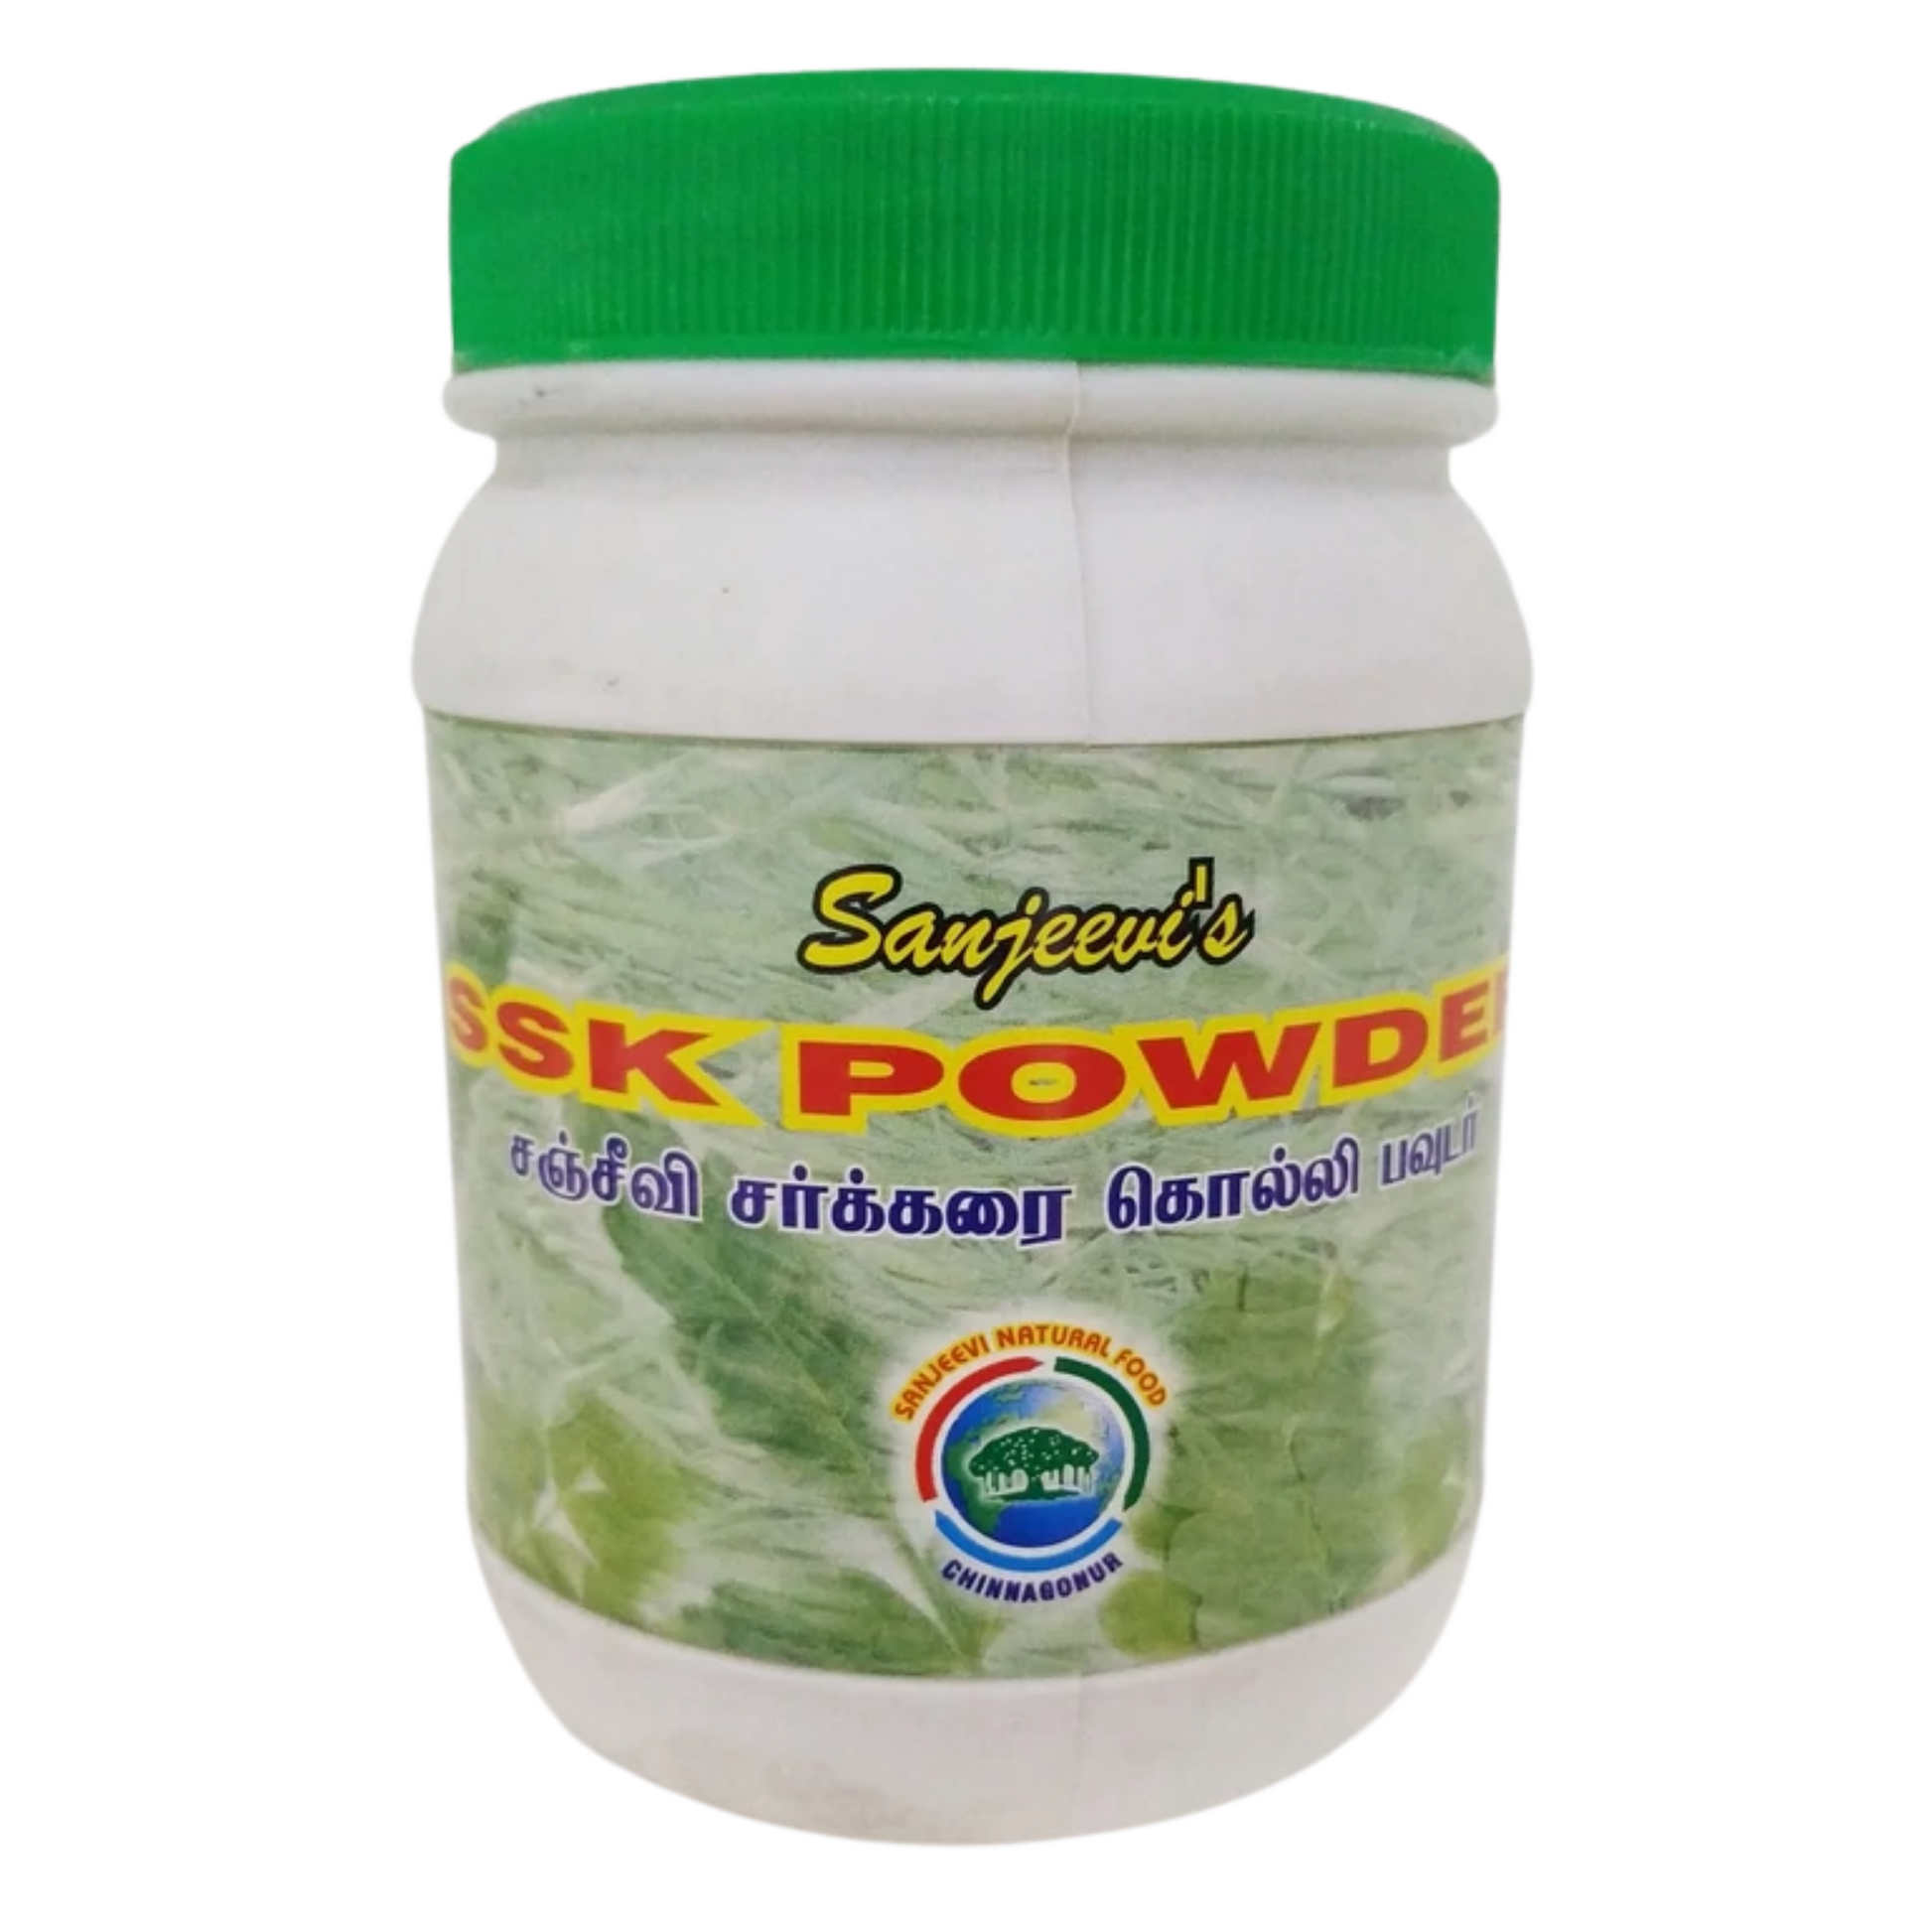 Shop SSK Powder 180gm Sarkarai Kolli Churanam at price 165.00 from Sanjeevi Online - Ayush Care